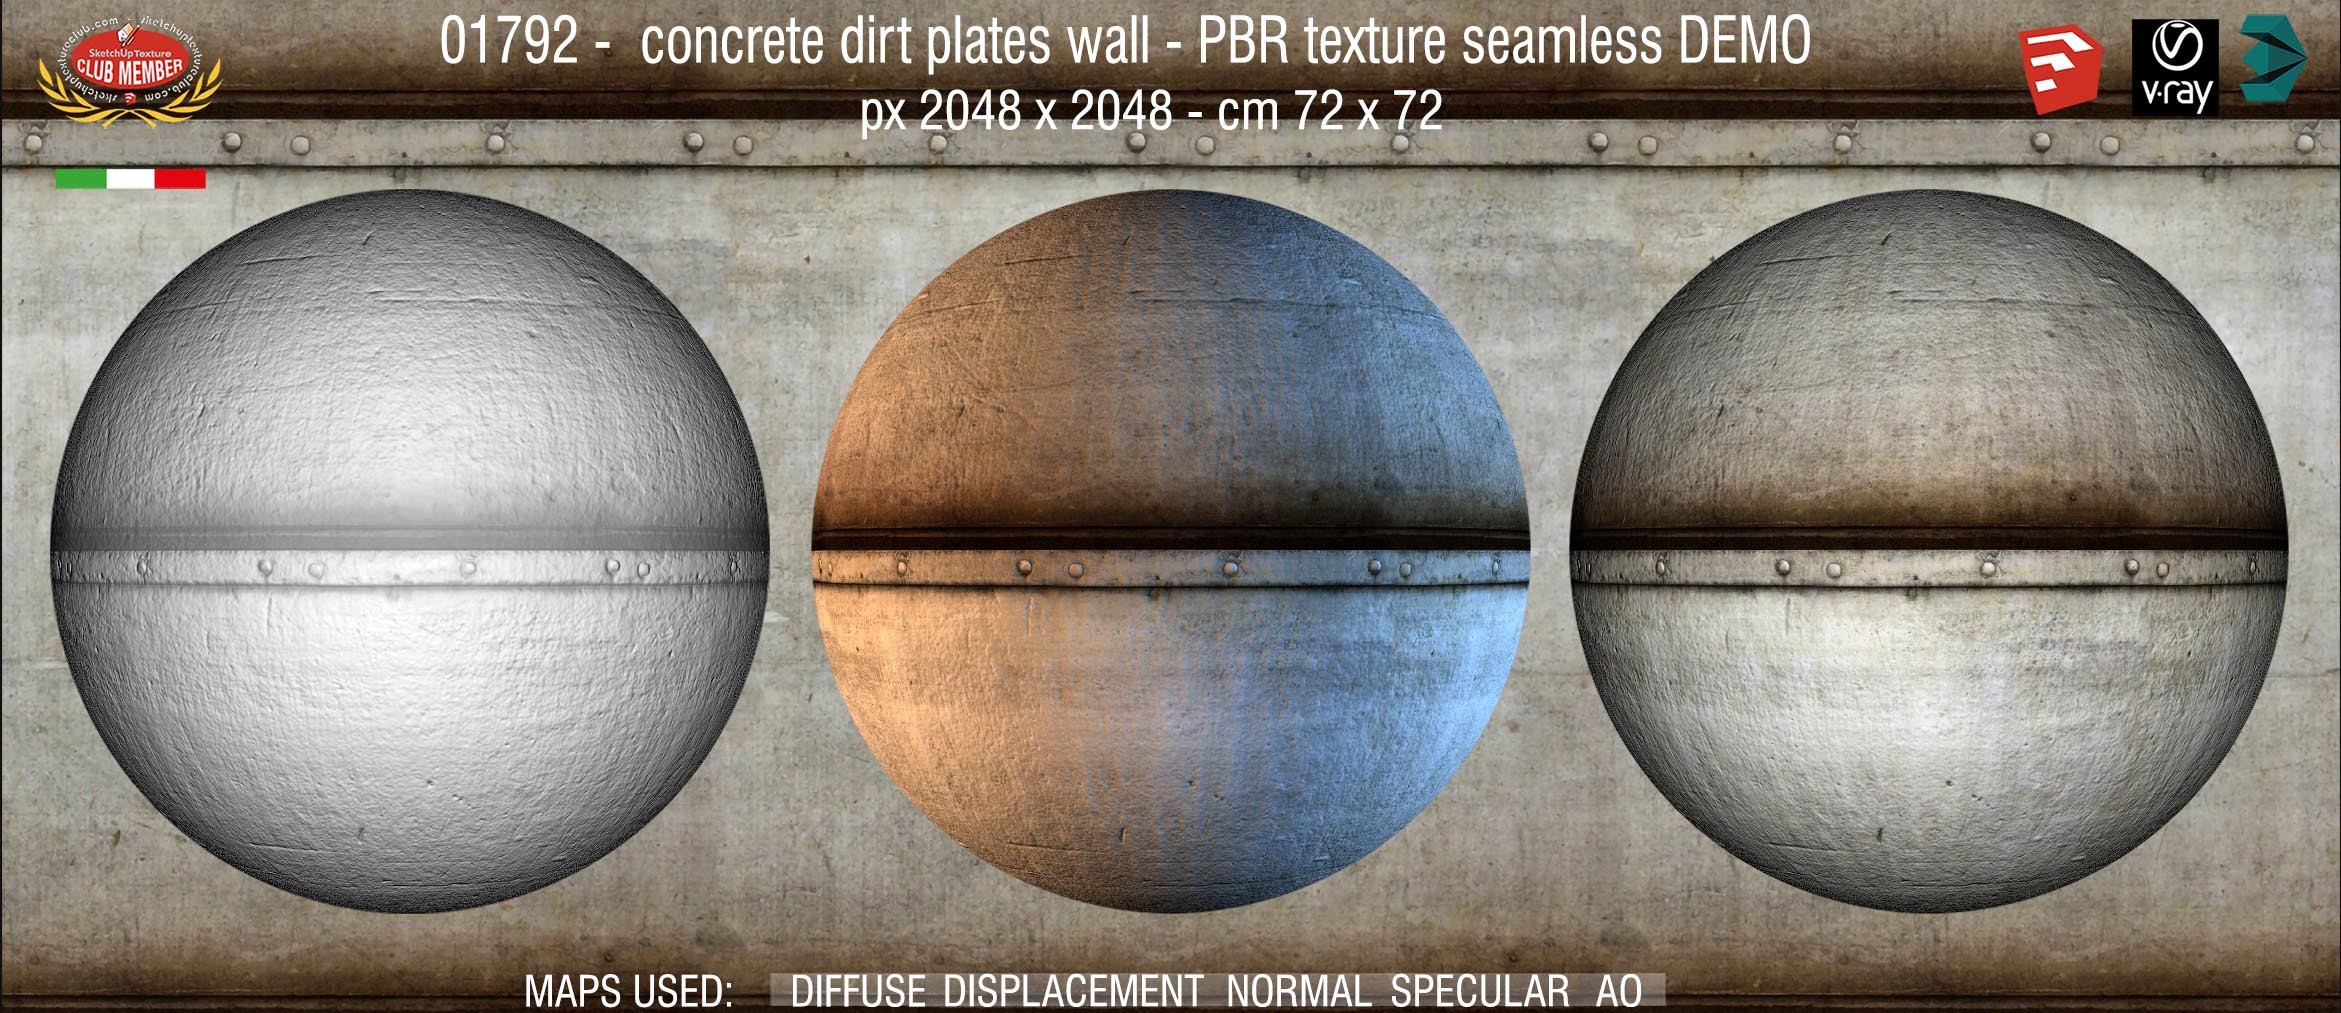 01792 concrete dirt plates wall PBR texture seamless DEMO